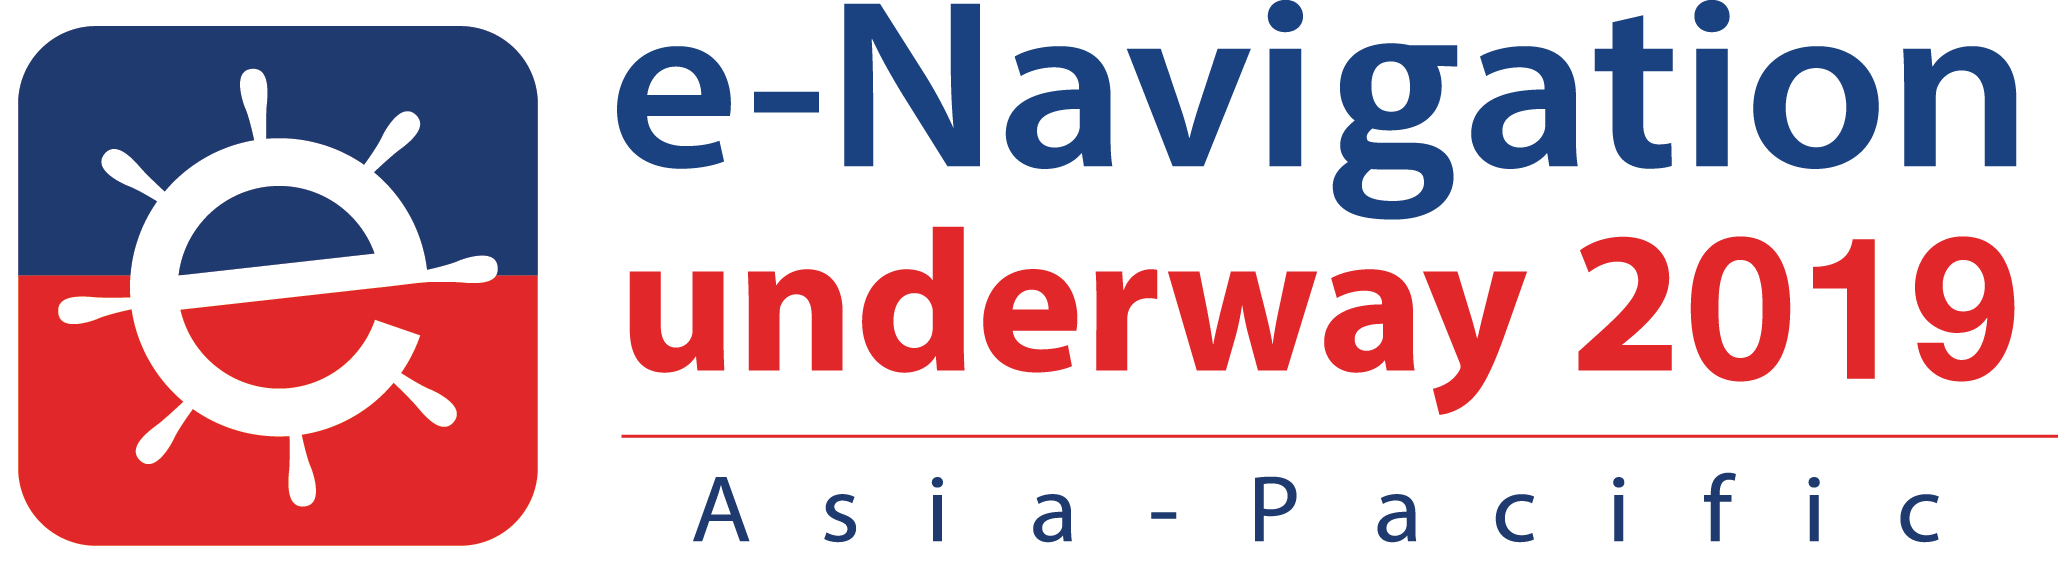 E Navigation Underway2019 Logo PNG image